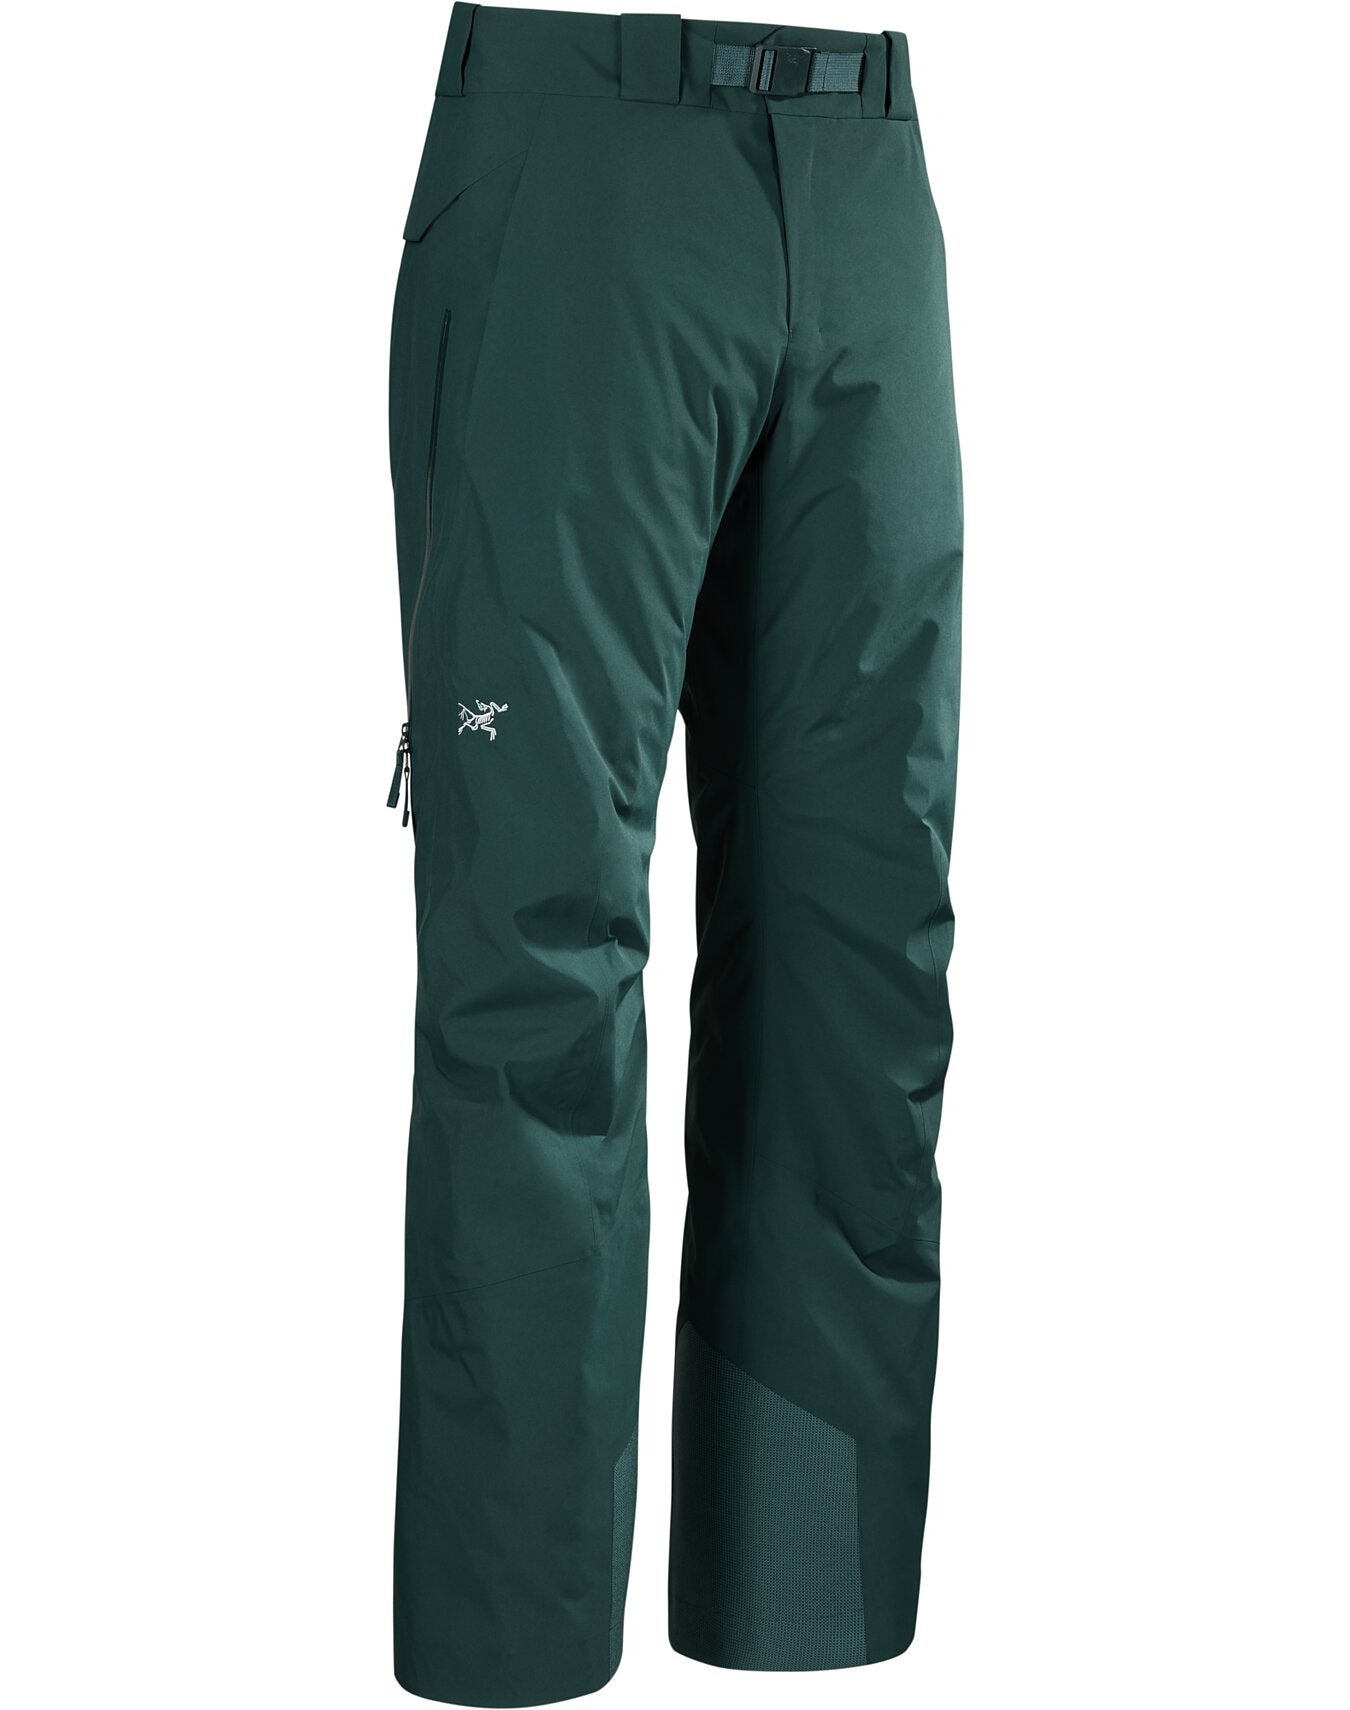 Arc'teryx Men's Macai Ski Pants (Past Season)